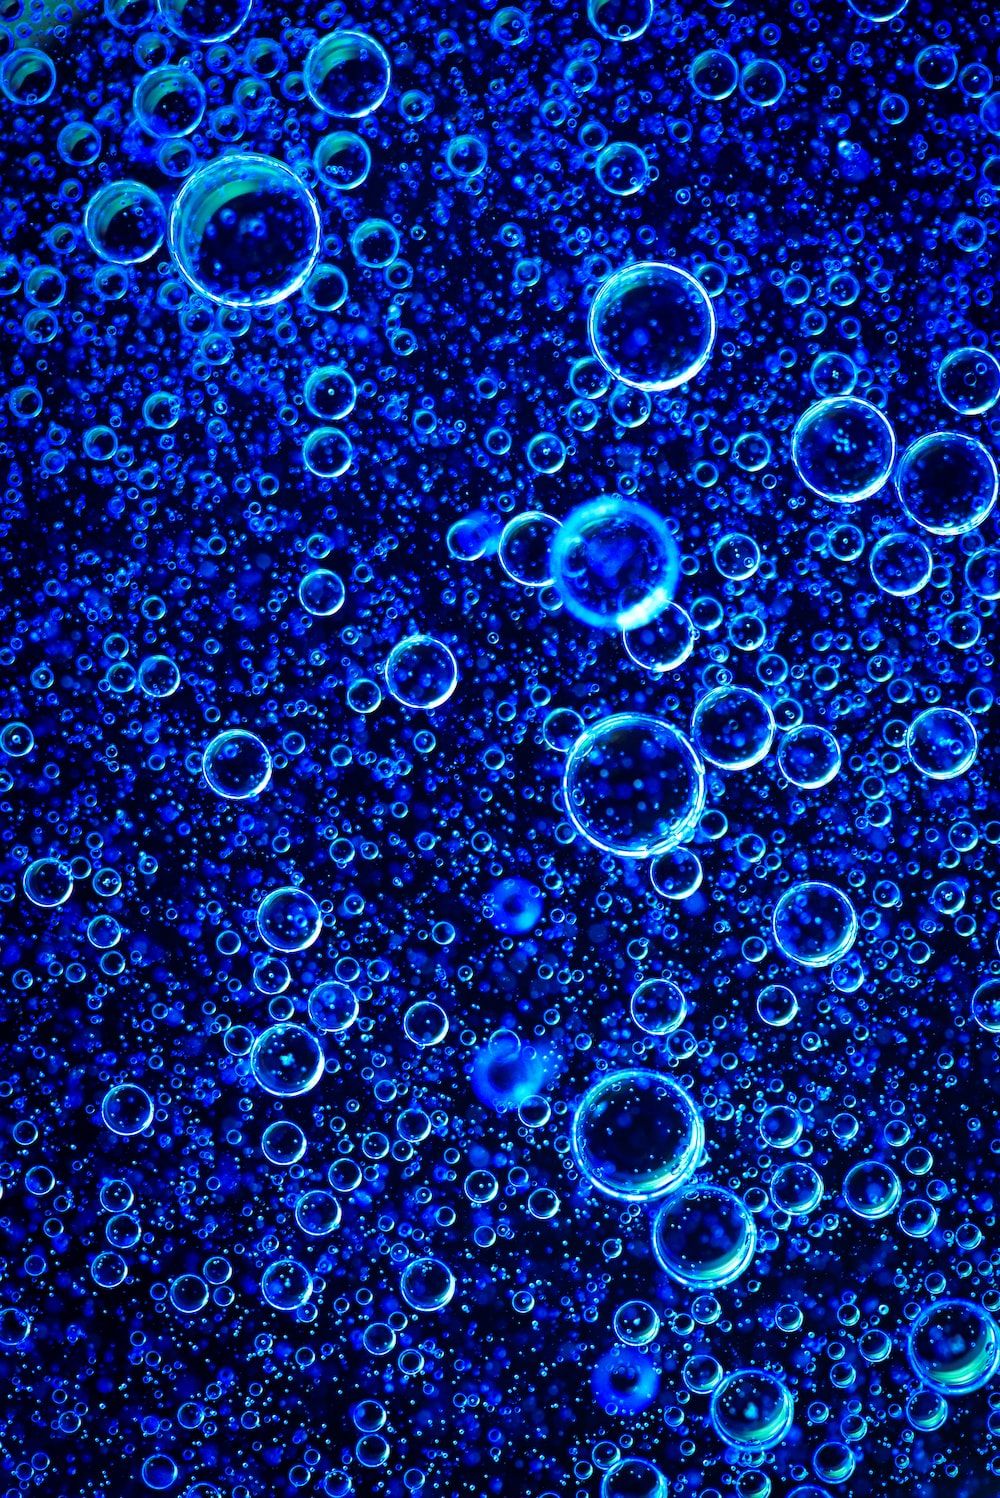 Bubbles Wallpaper Picture. Download Free Image